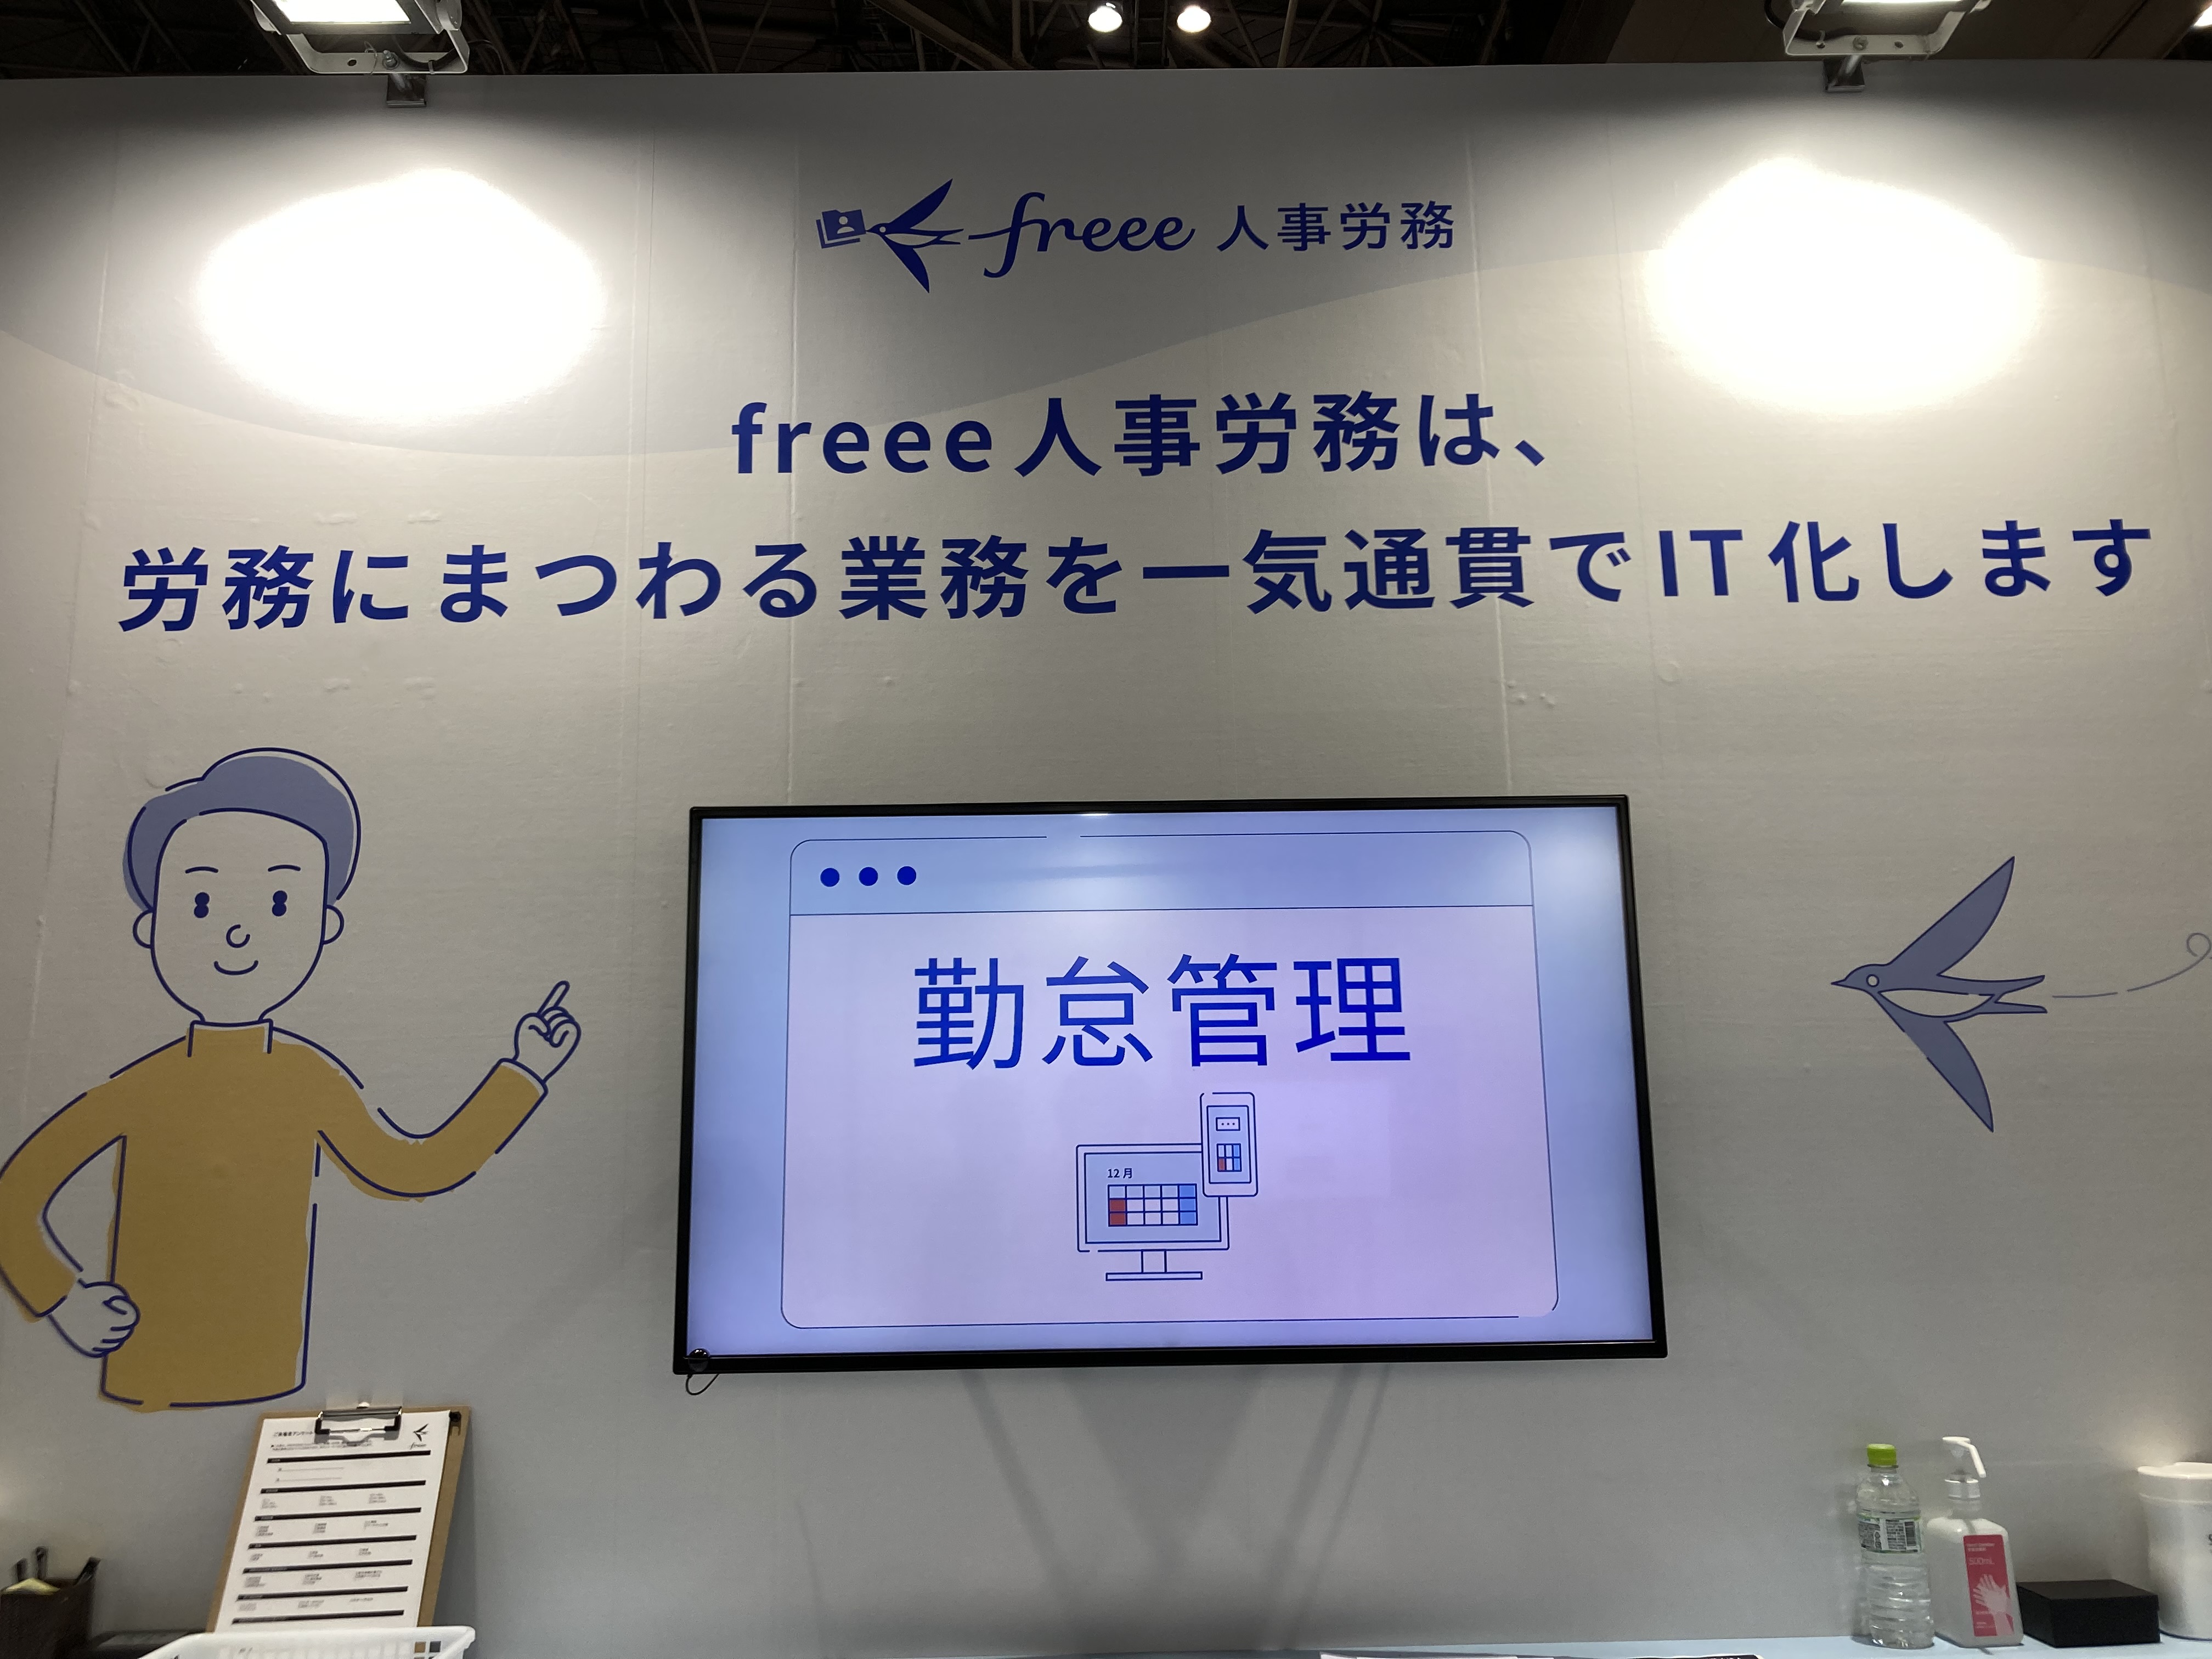 freee株式会社 16-45 no2